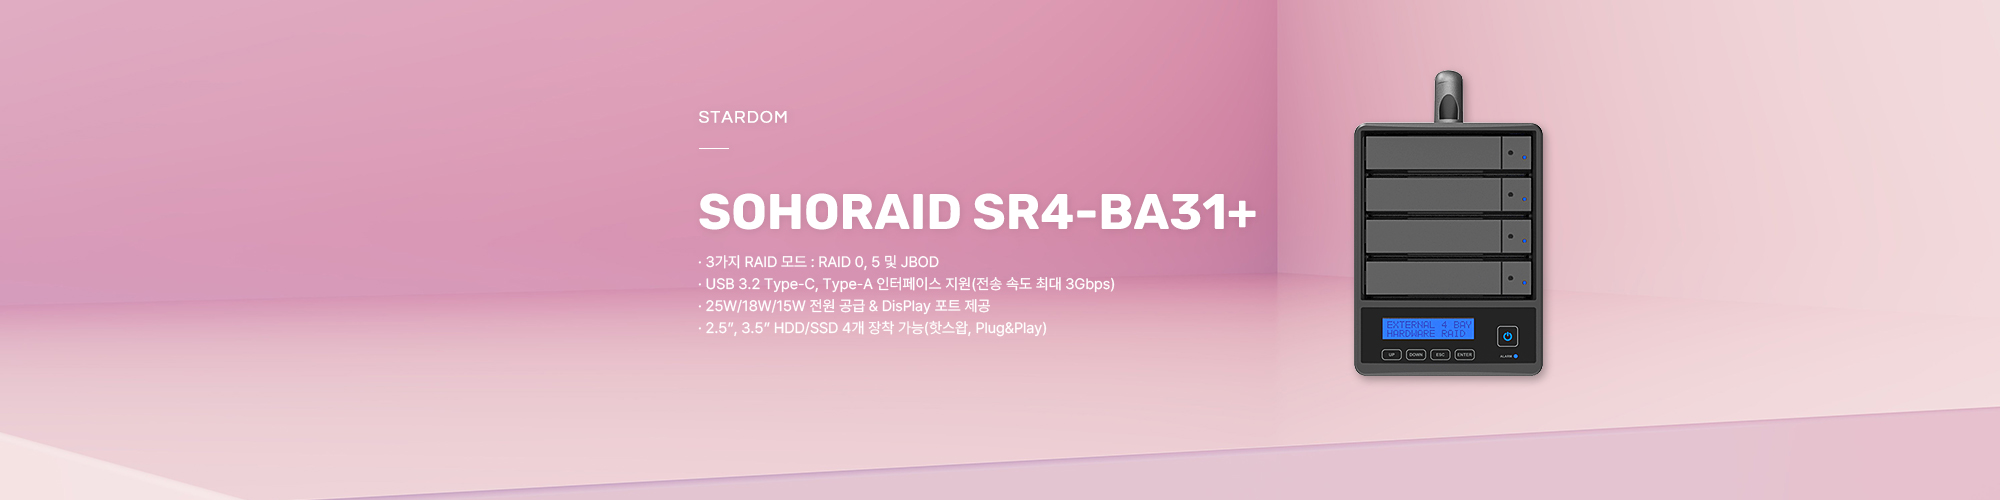 USB 3.2 2베이 외장스토리지, SOHORAID SR2-BA31 제품 보러가기